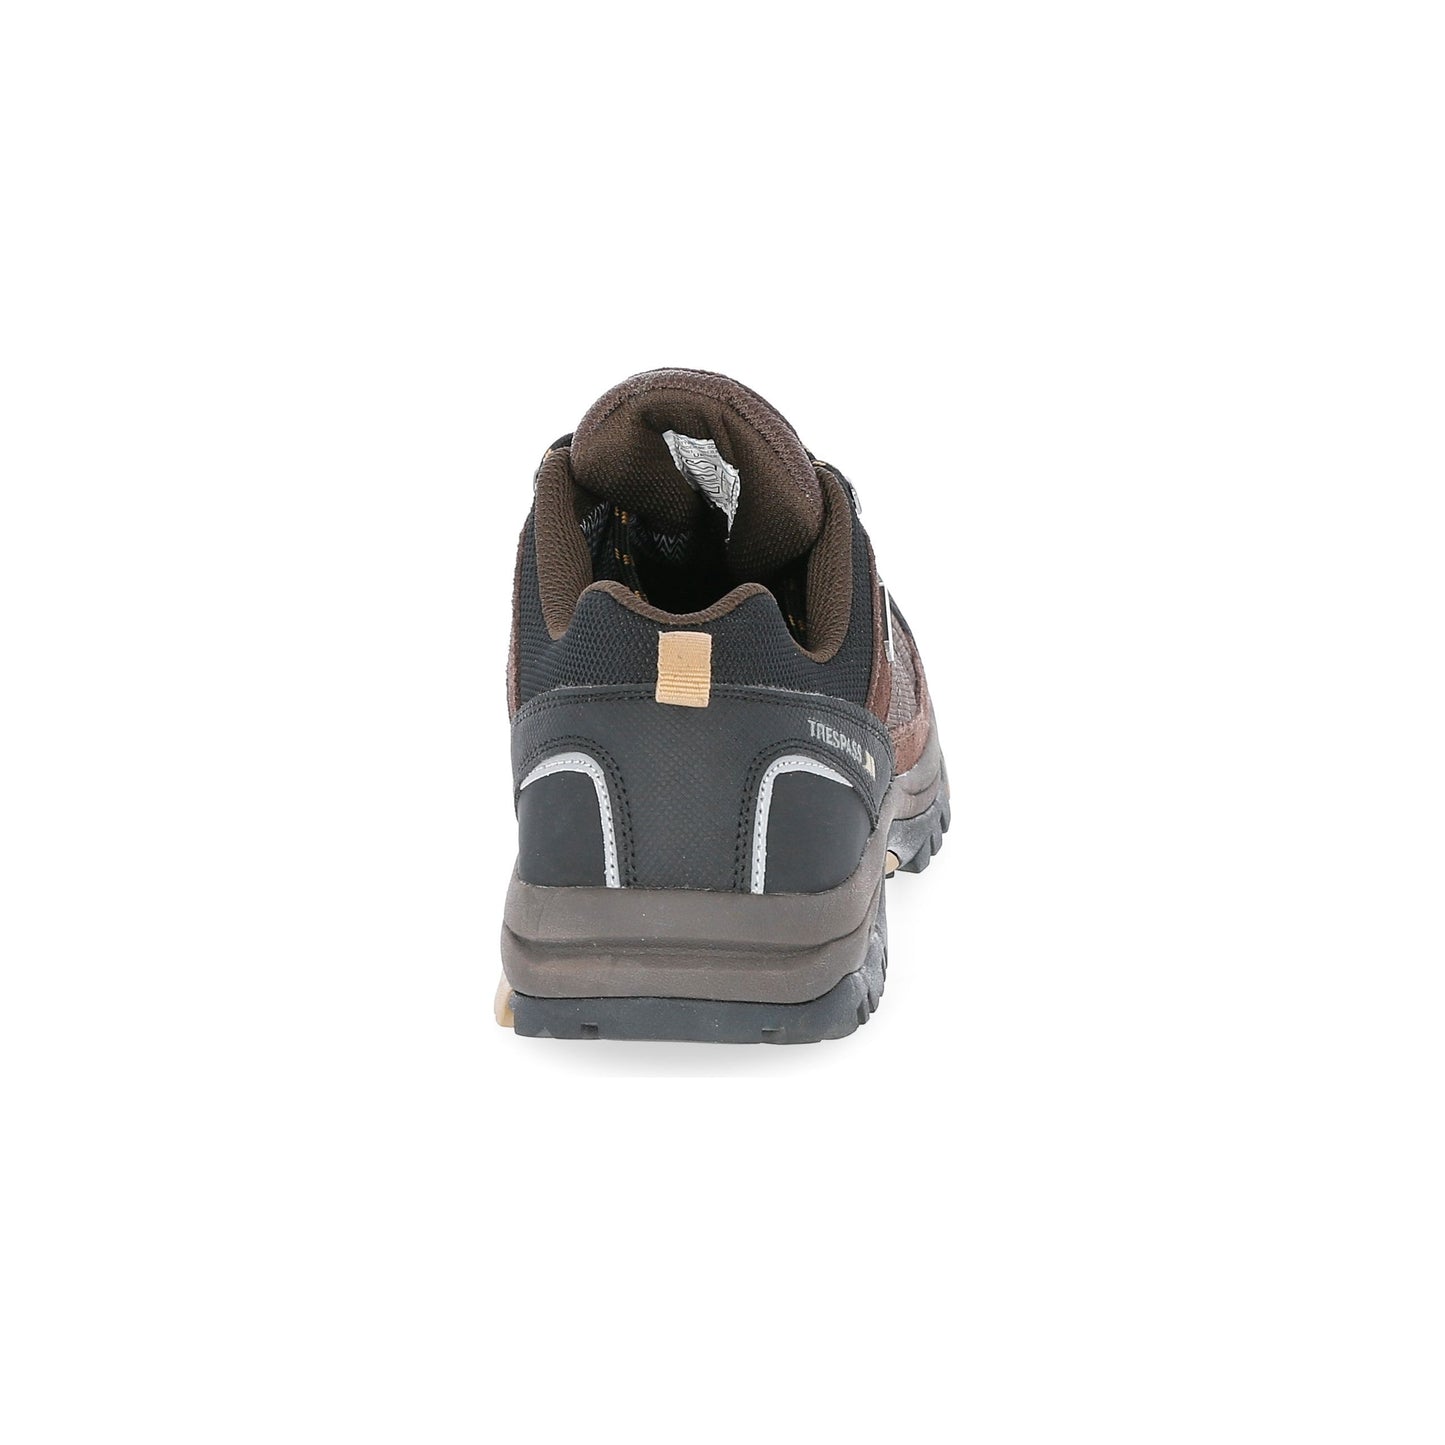 Scarp Men's Walking Shoes / Trainers - Dark Brown